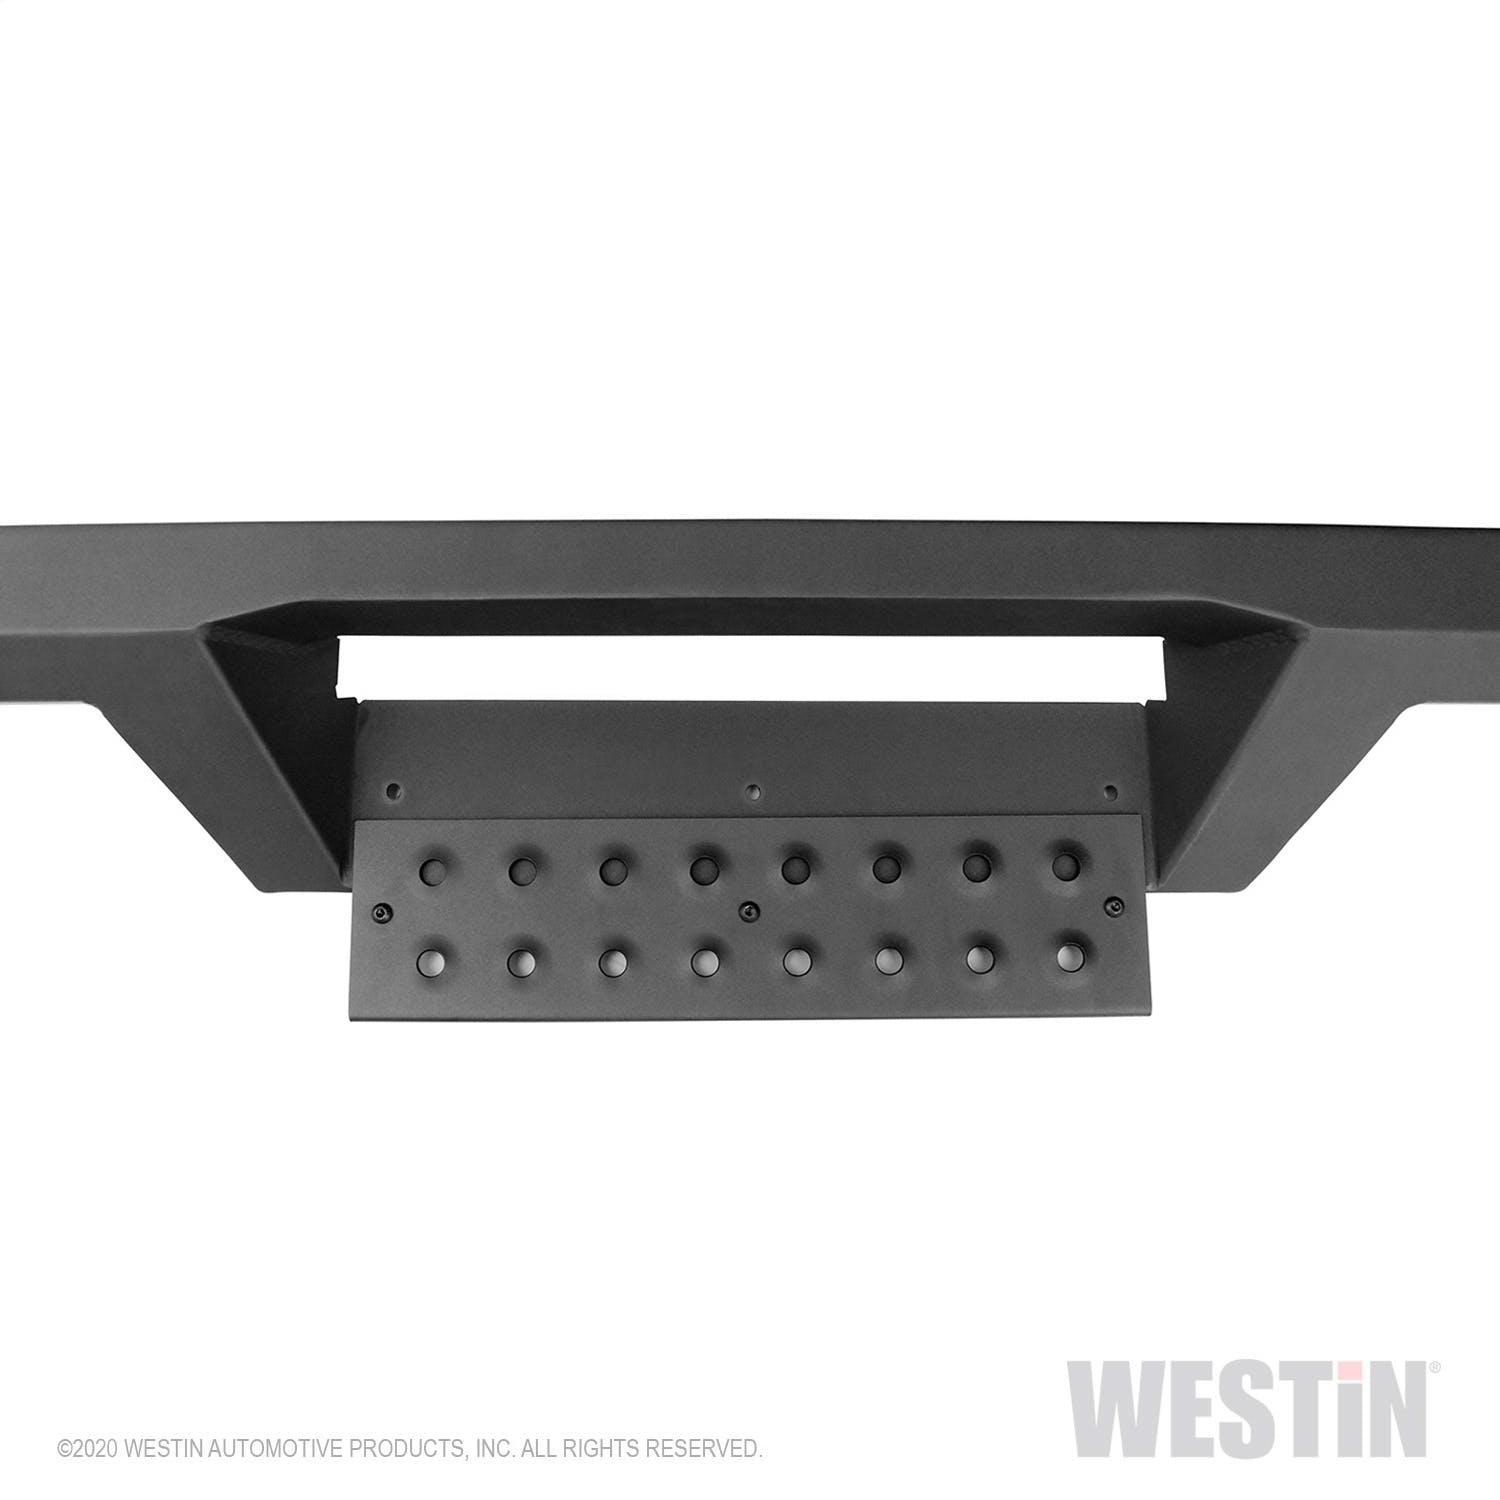 Westin Automotive 56-534755 HDX Drop Wheel-to-Wheel Nerf Step Bars, Textured Black